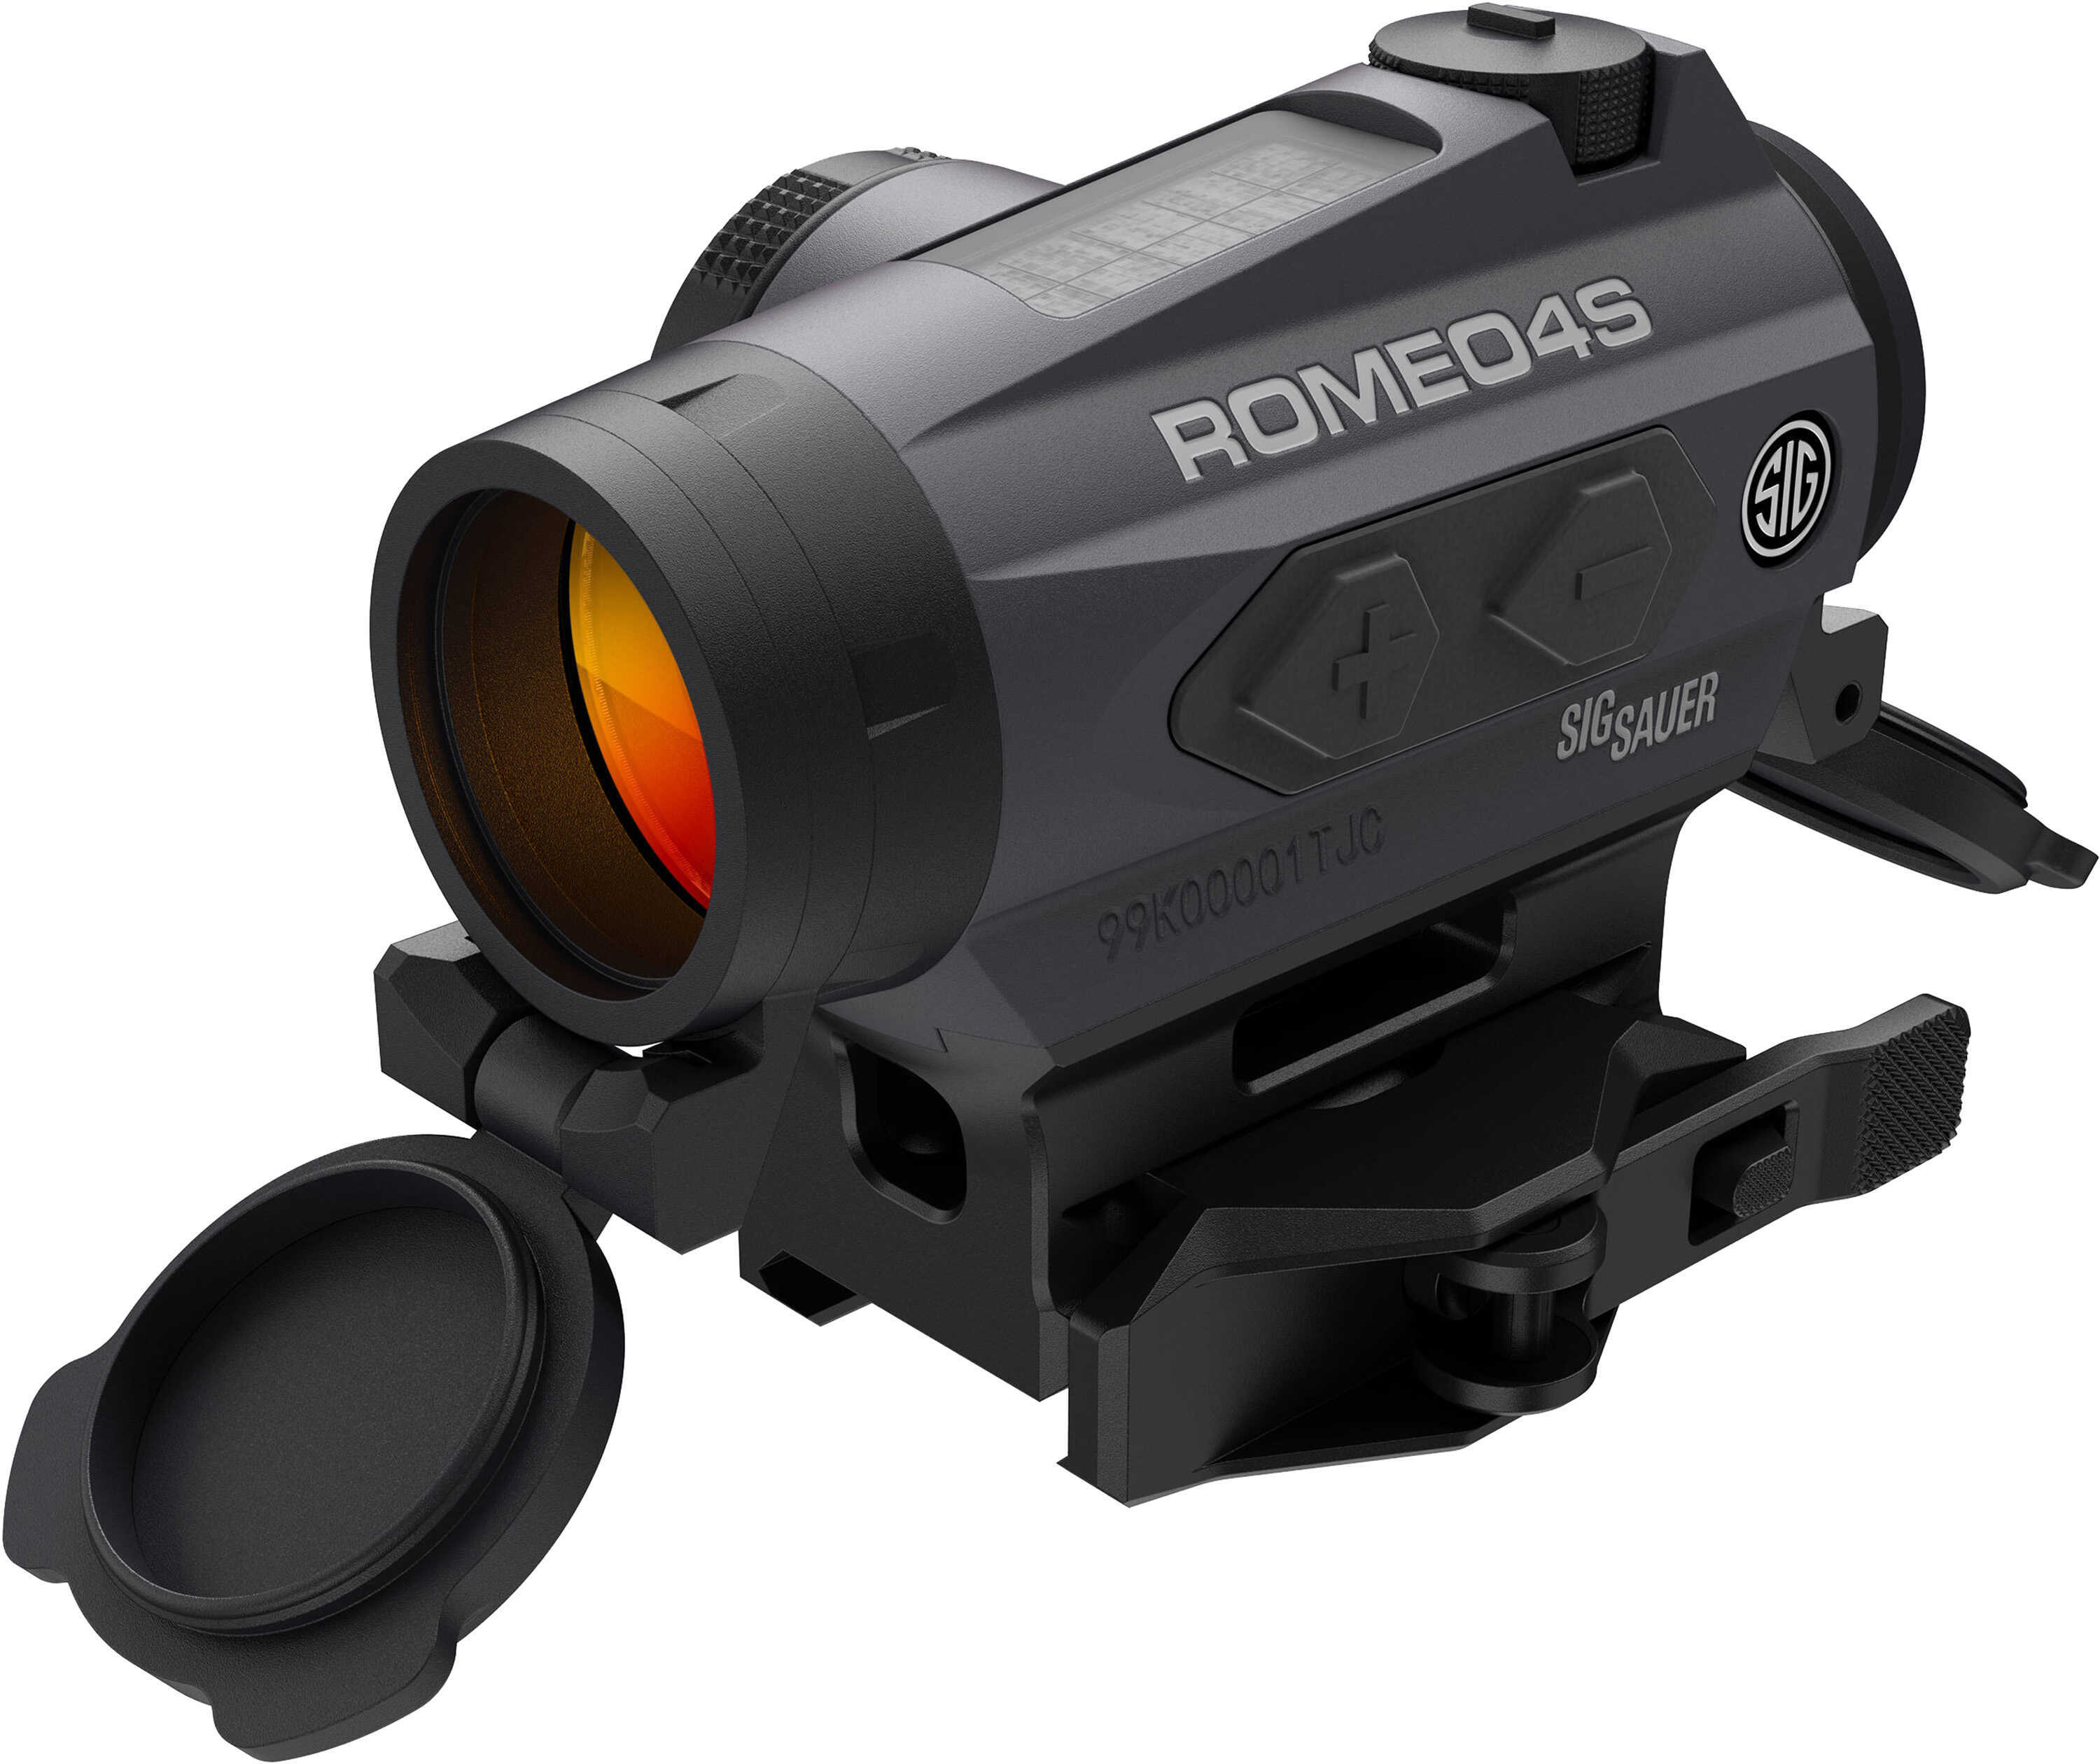 Sig Sauer Romeo4S Solar PoweRed Red Dot Sight - 1x20mm 2 MOA Ballistic CirclePlex Graphite